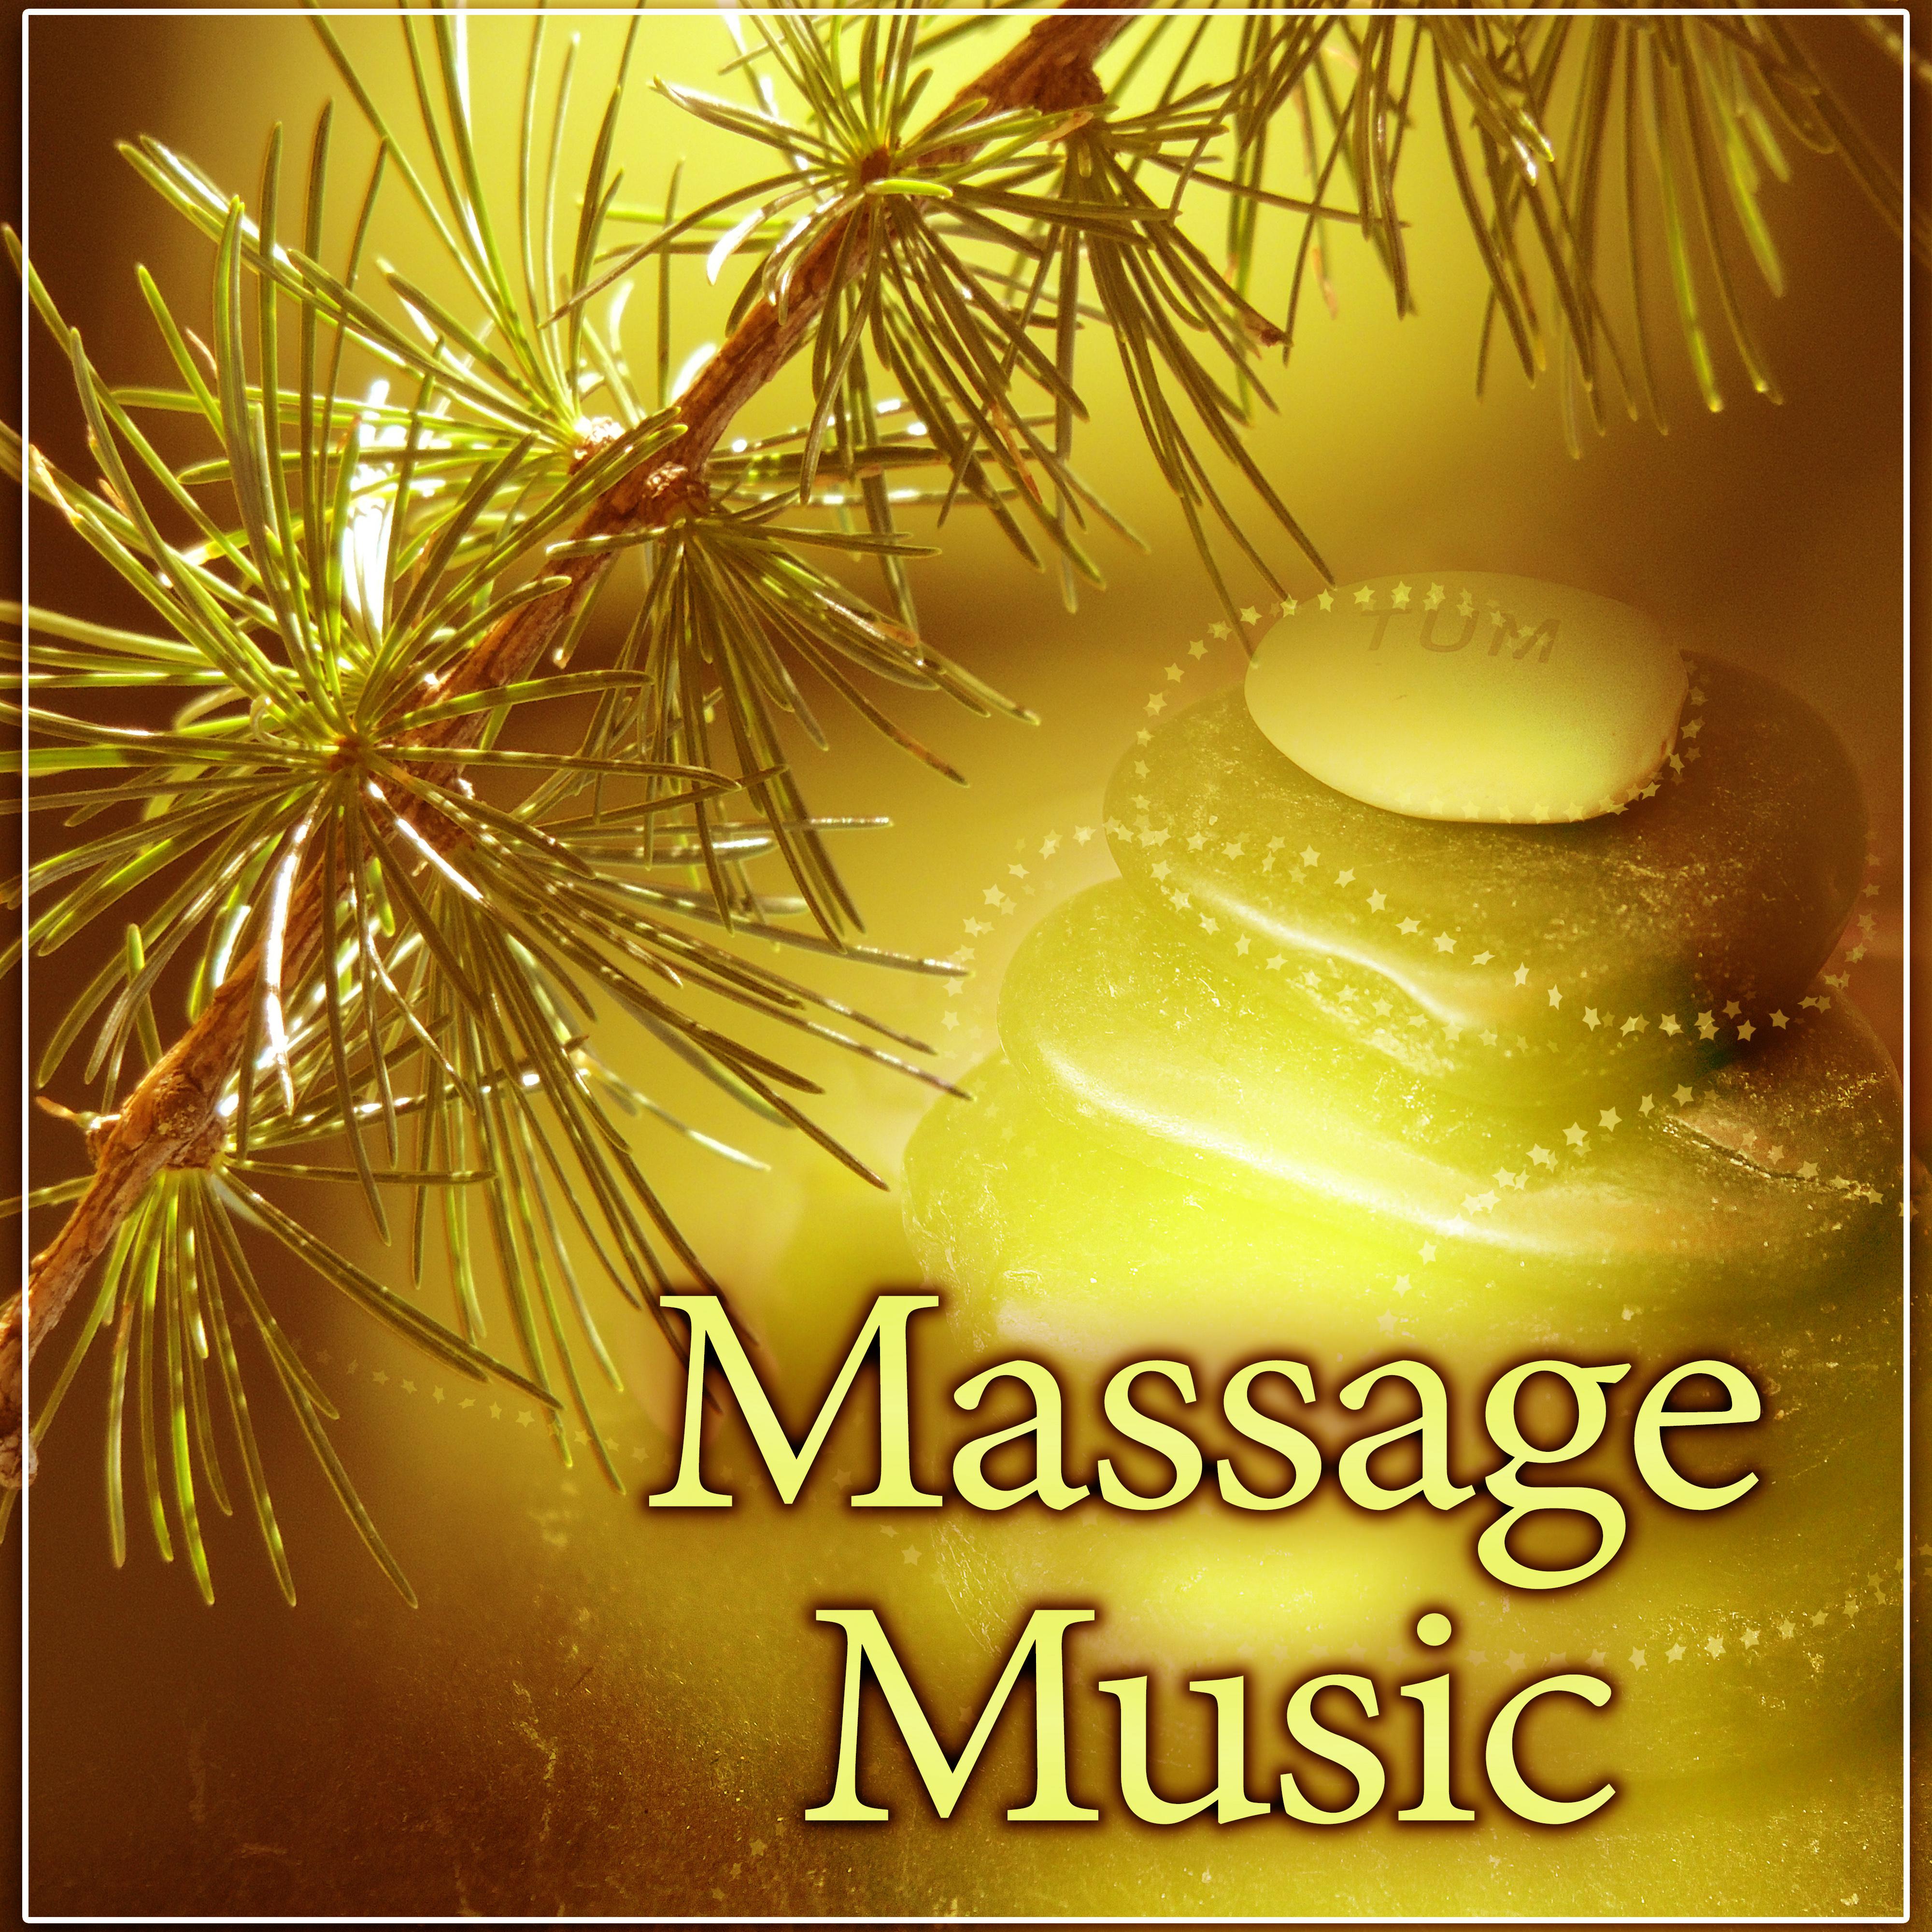 Massage Music  Calming Nature Music for Classic Massage, Hot Stone Massage, Chocolate Massage, Medical Massage, SPA, Relieve Stress, Relaxing Music, Beautiful Moments